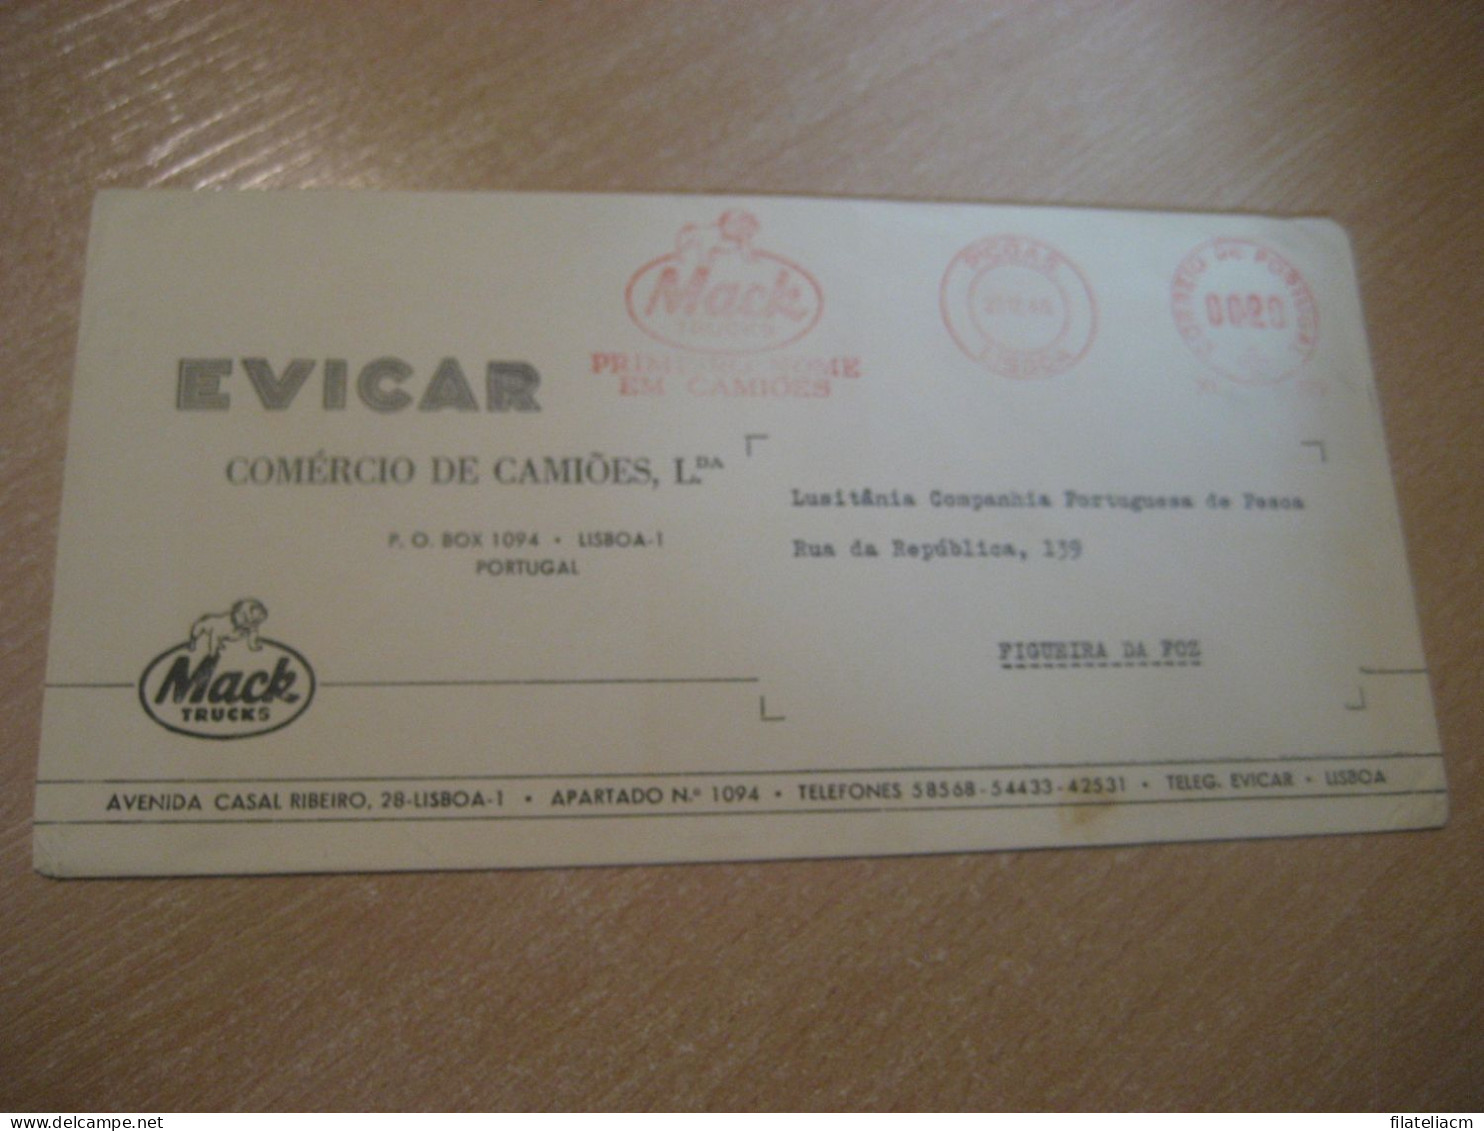 LISBOA 1965 To Figueira Da Foz EVICAR Mack Trucks Truck Dog Meter Mail Cancel Cover PORTUGAL - Lettres & Documents